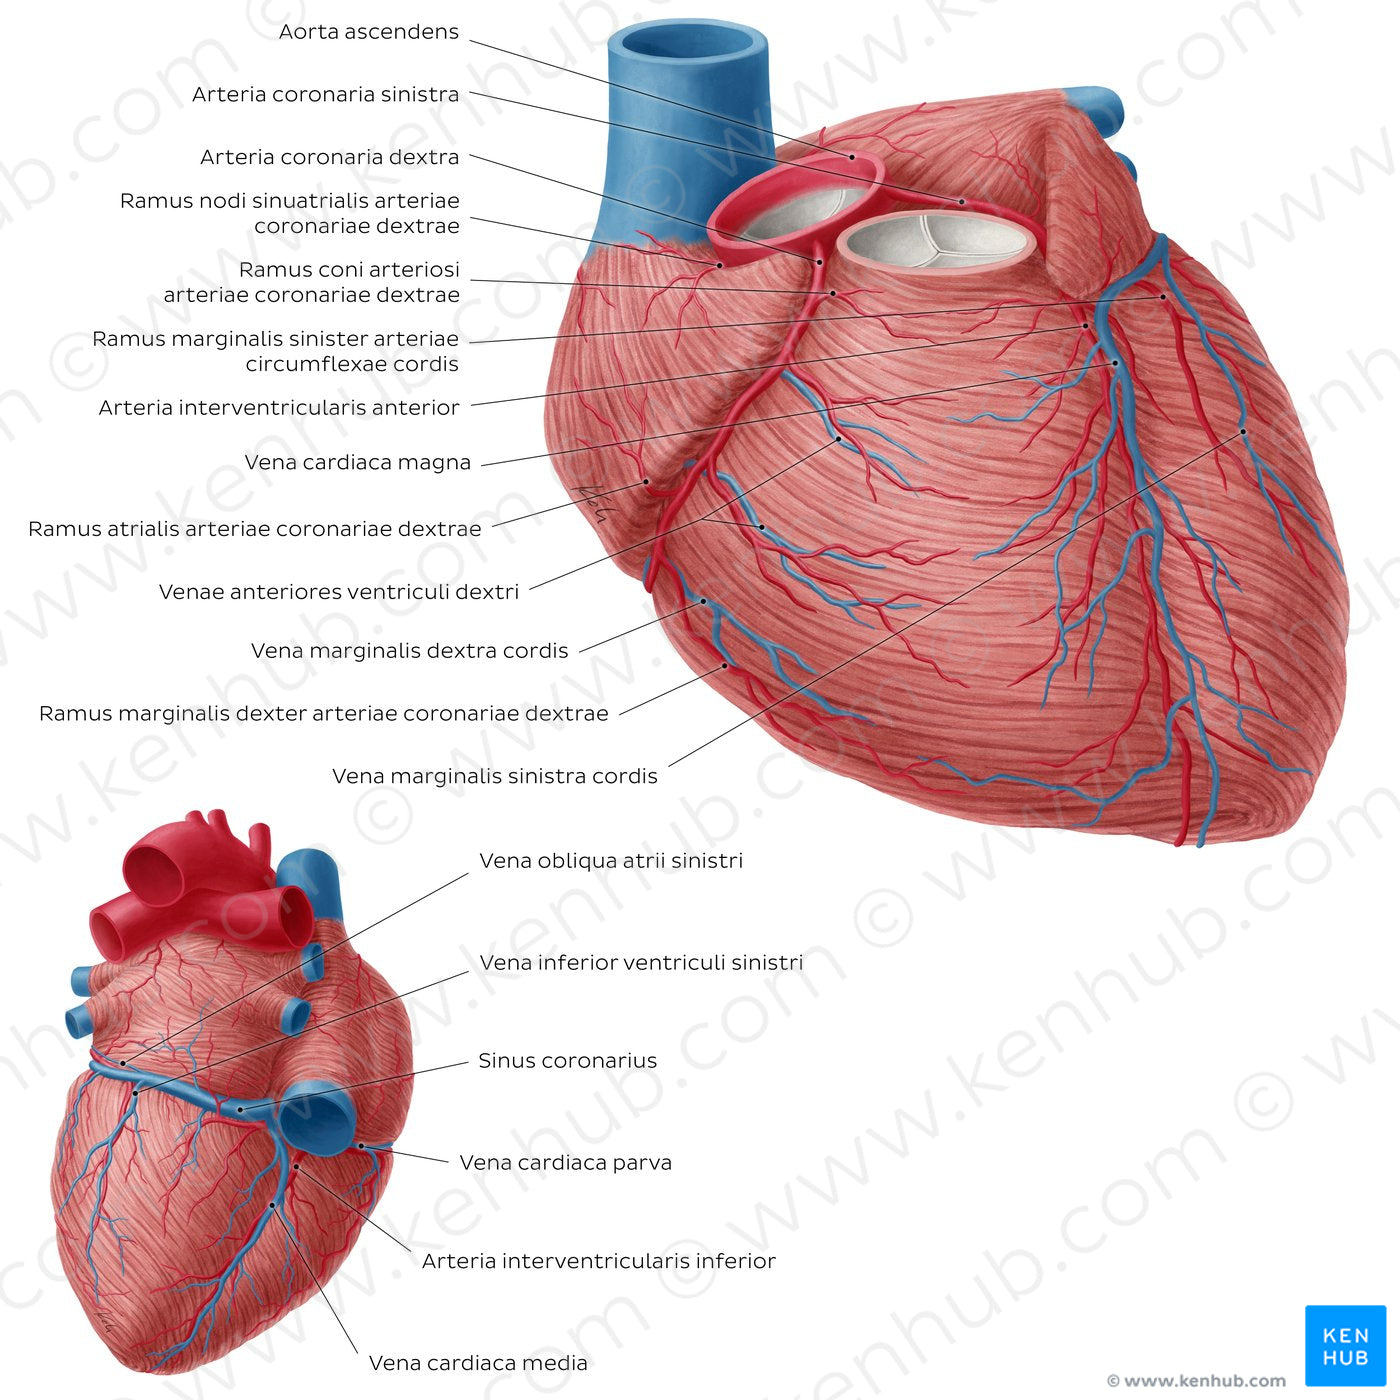 Coronary arteries and cardiac veins (Latin)